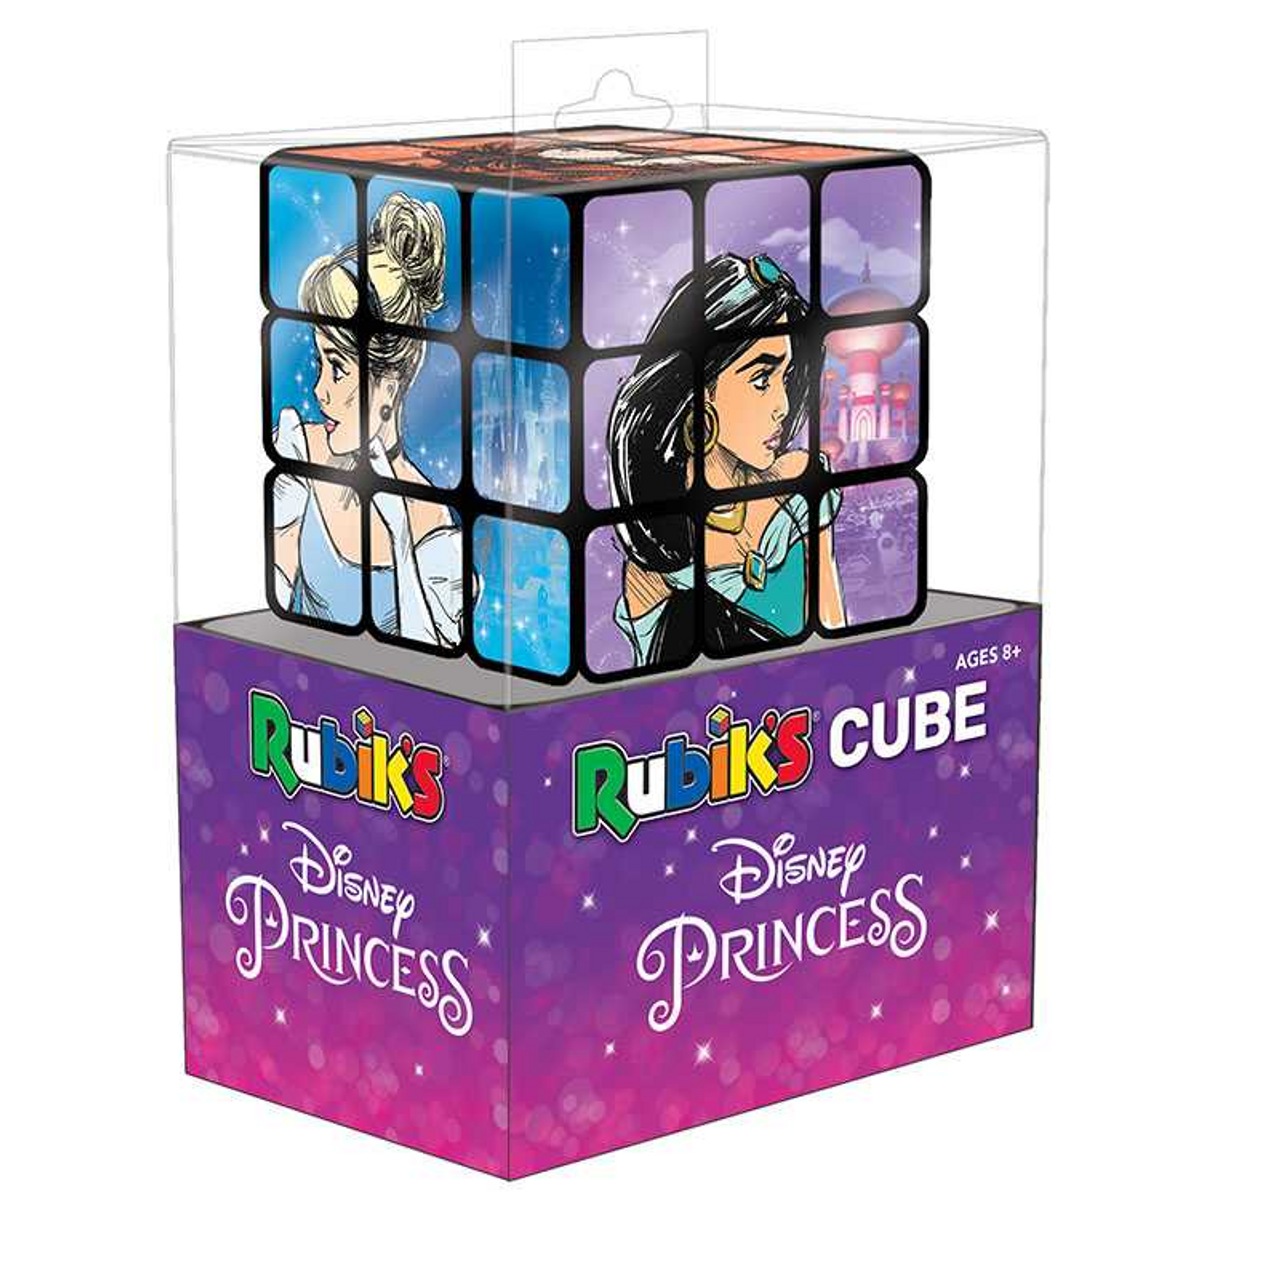 Rubik's Cube: Disney Princess Edition